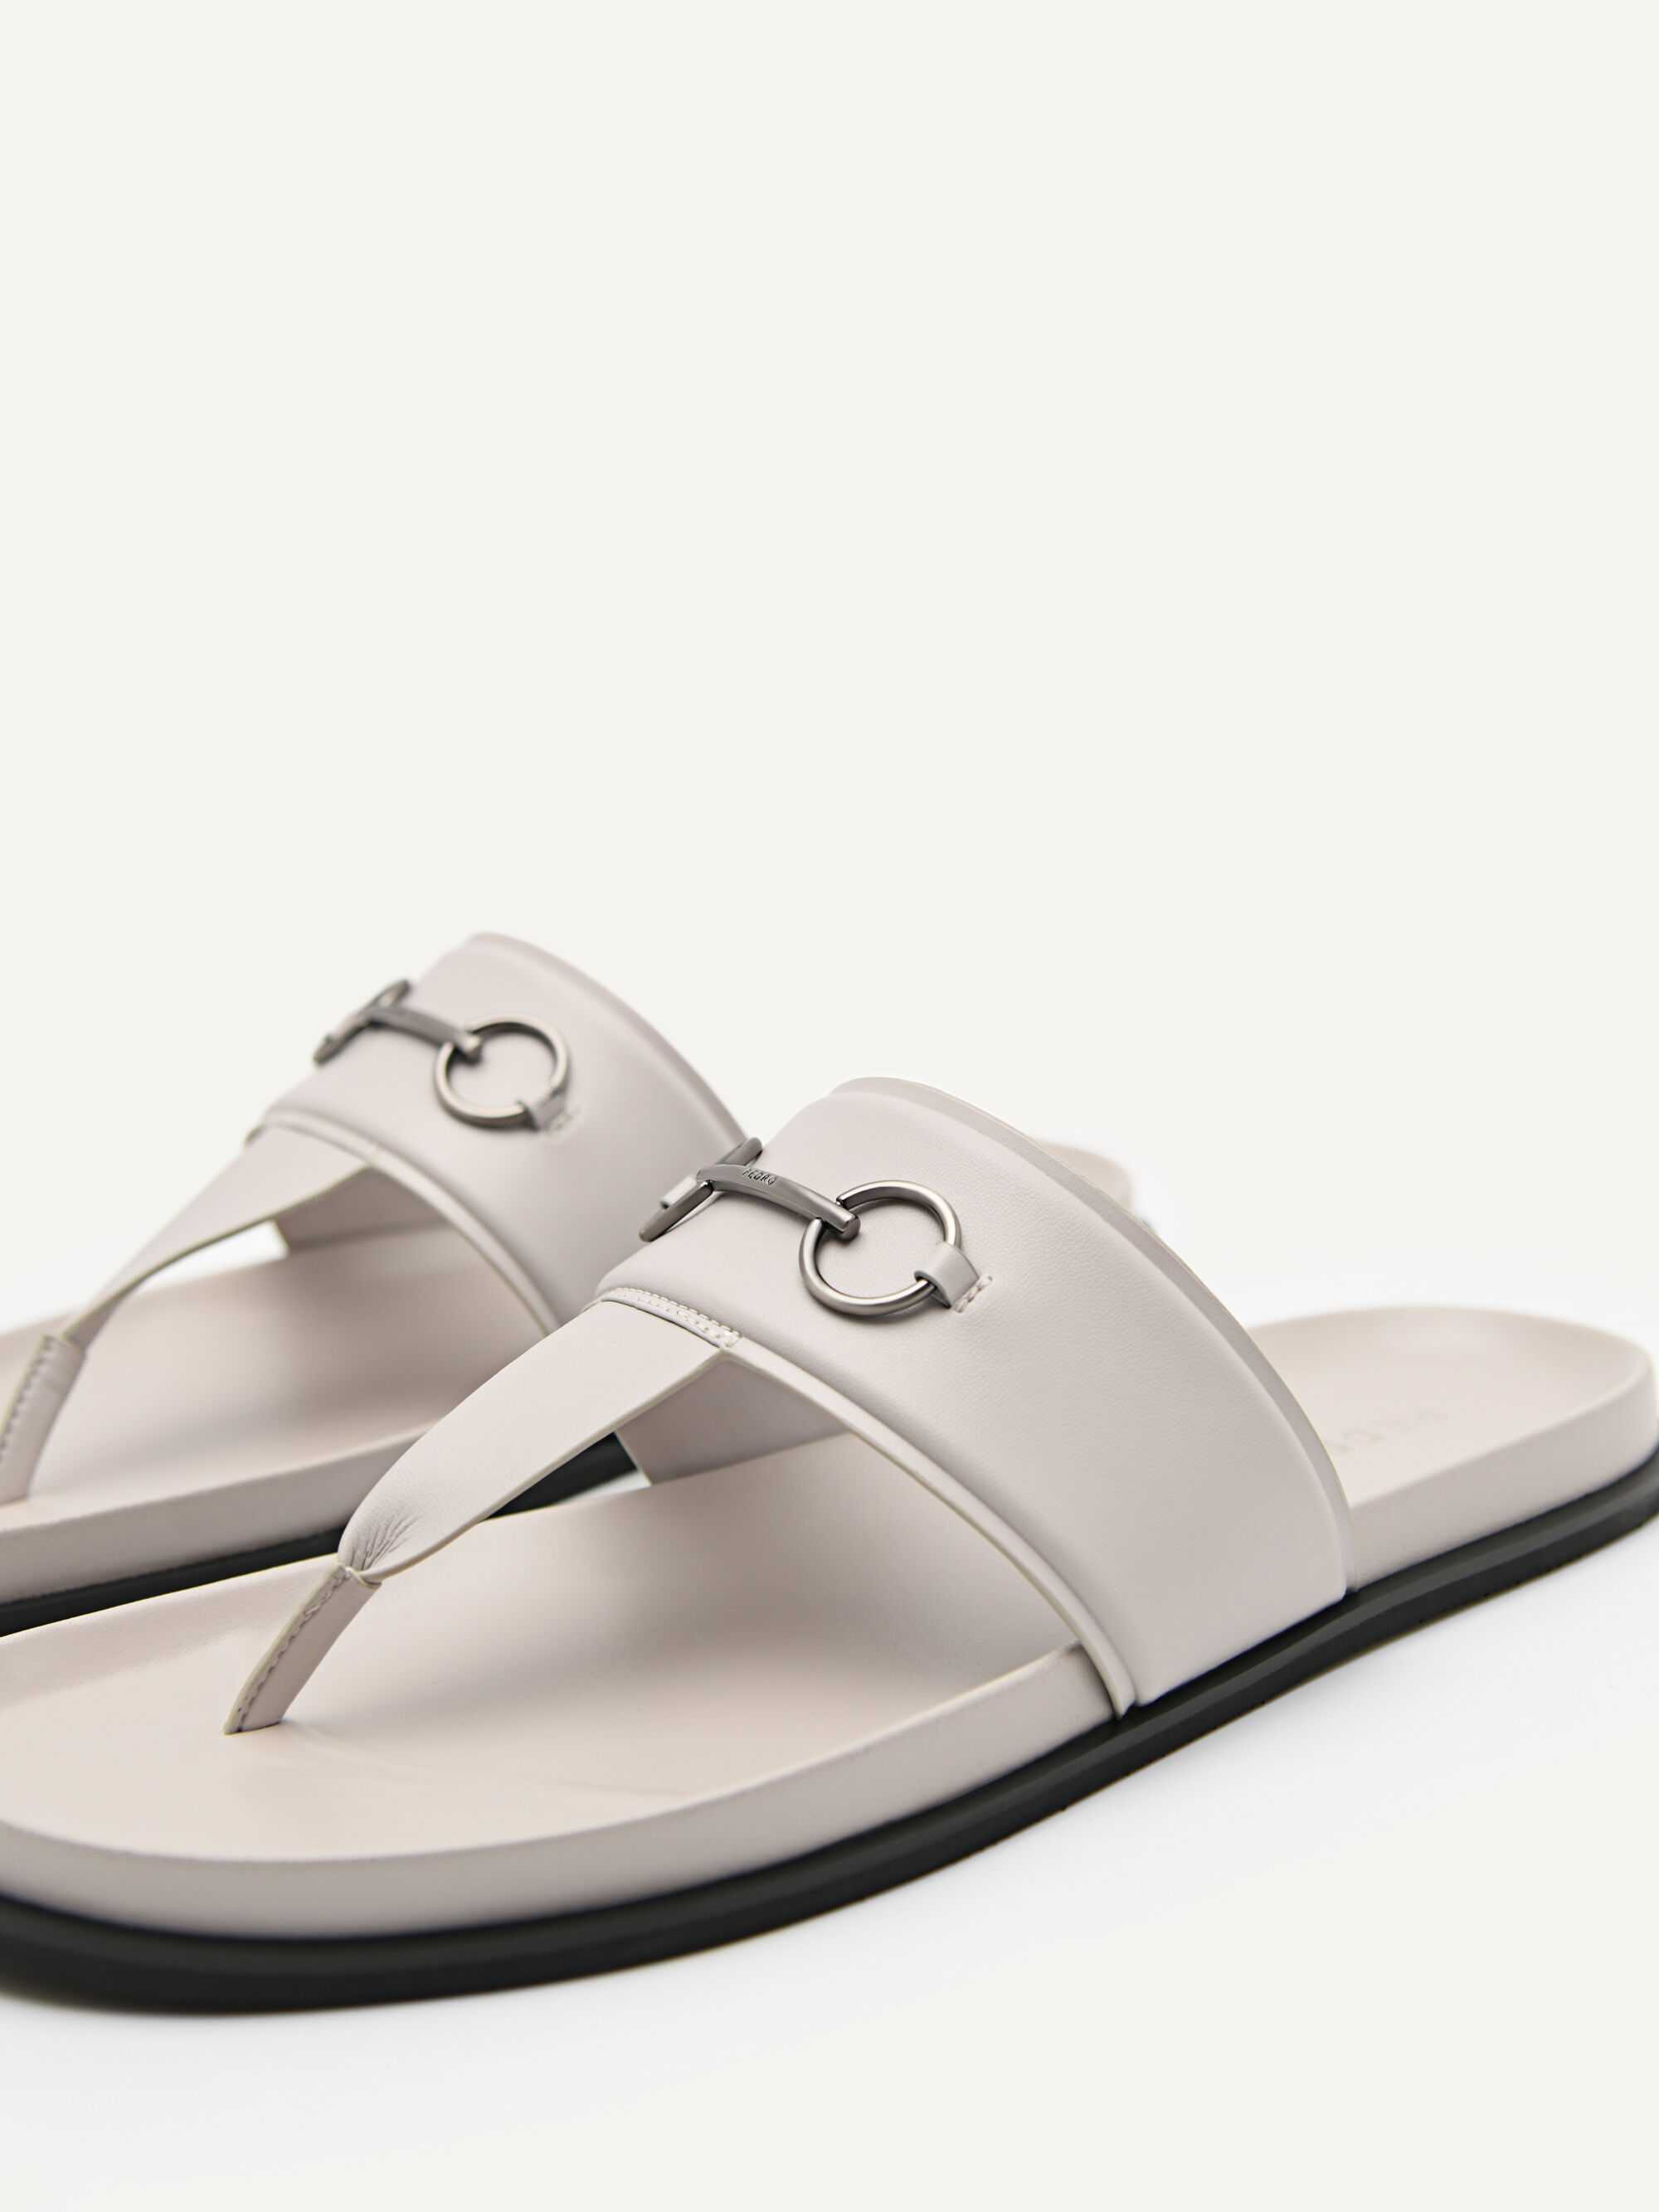 Bel-Air Sandals, Light Grey